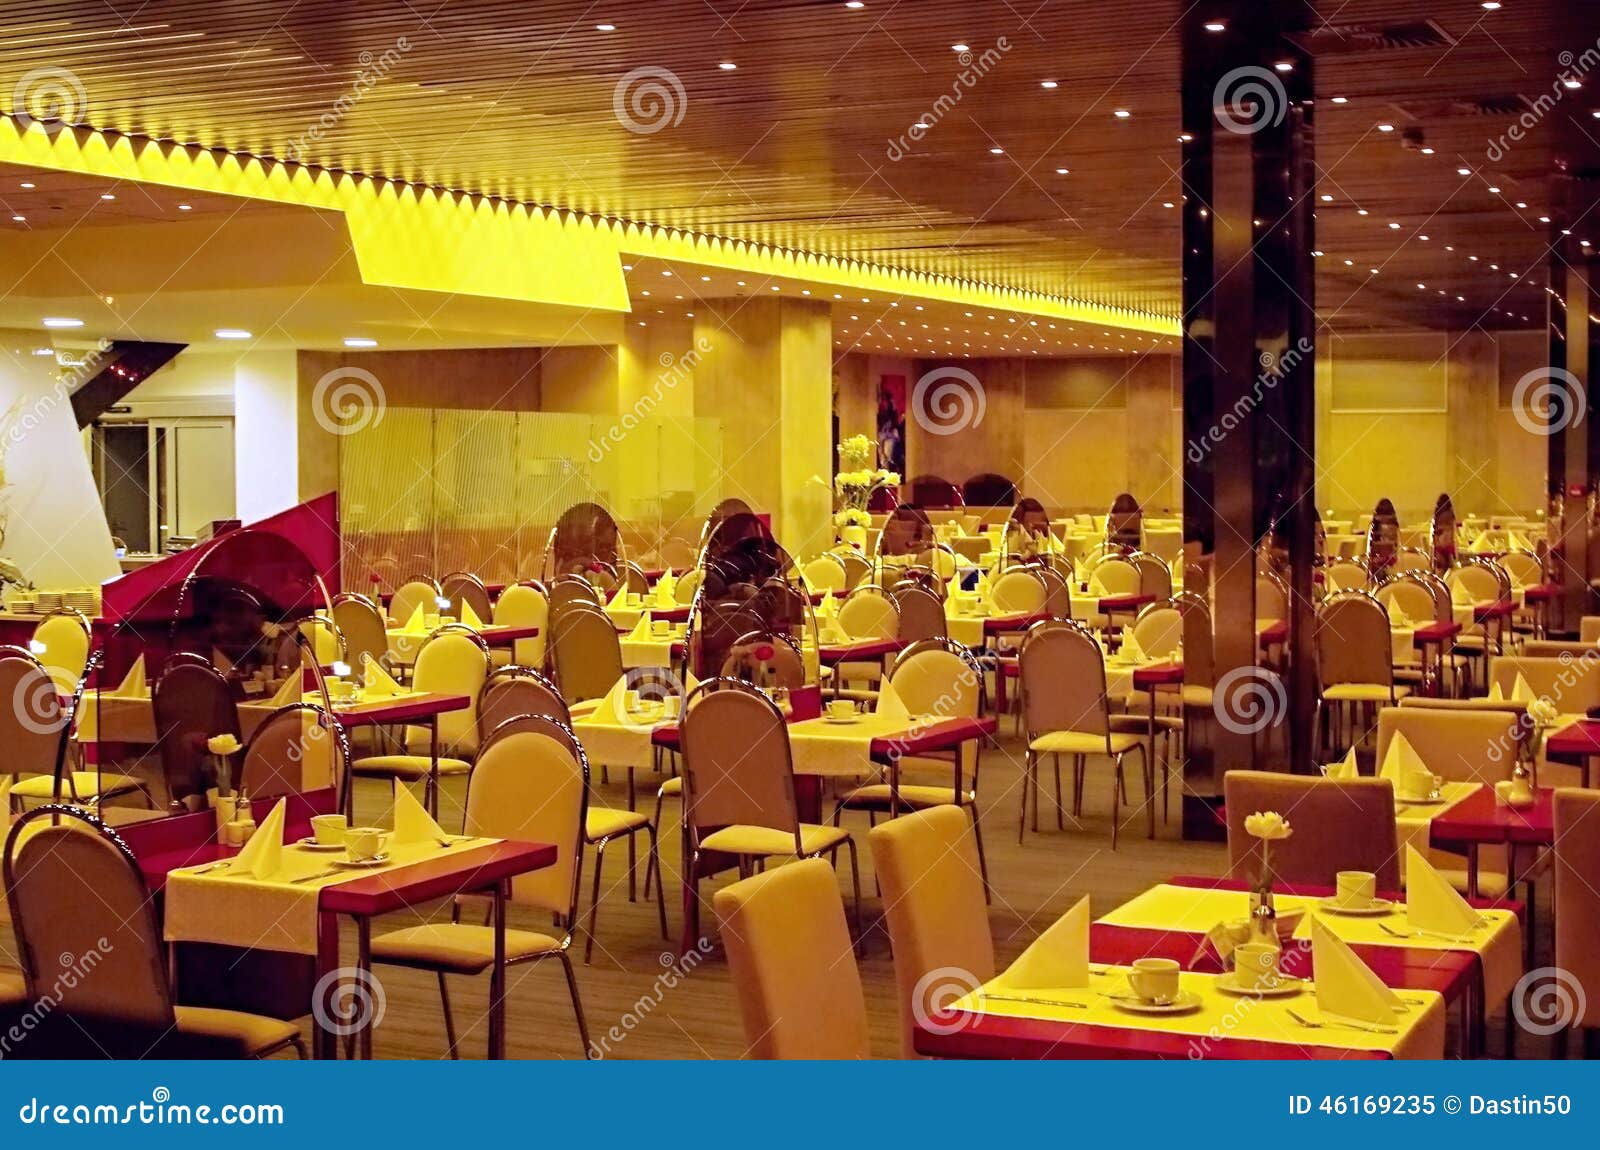 Interior of a Modern Hotel Restaurants Stock Image - Image of dish ...